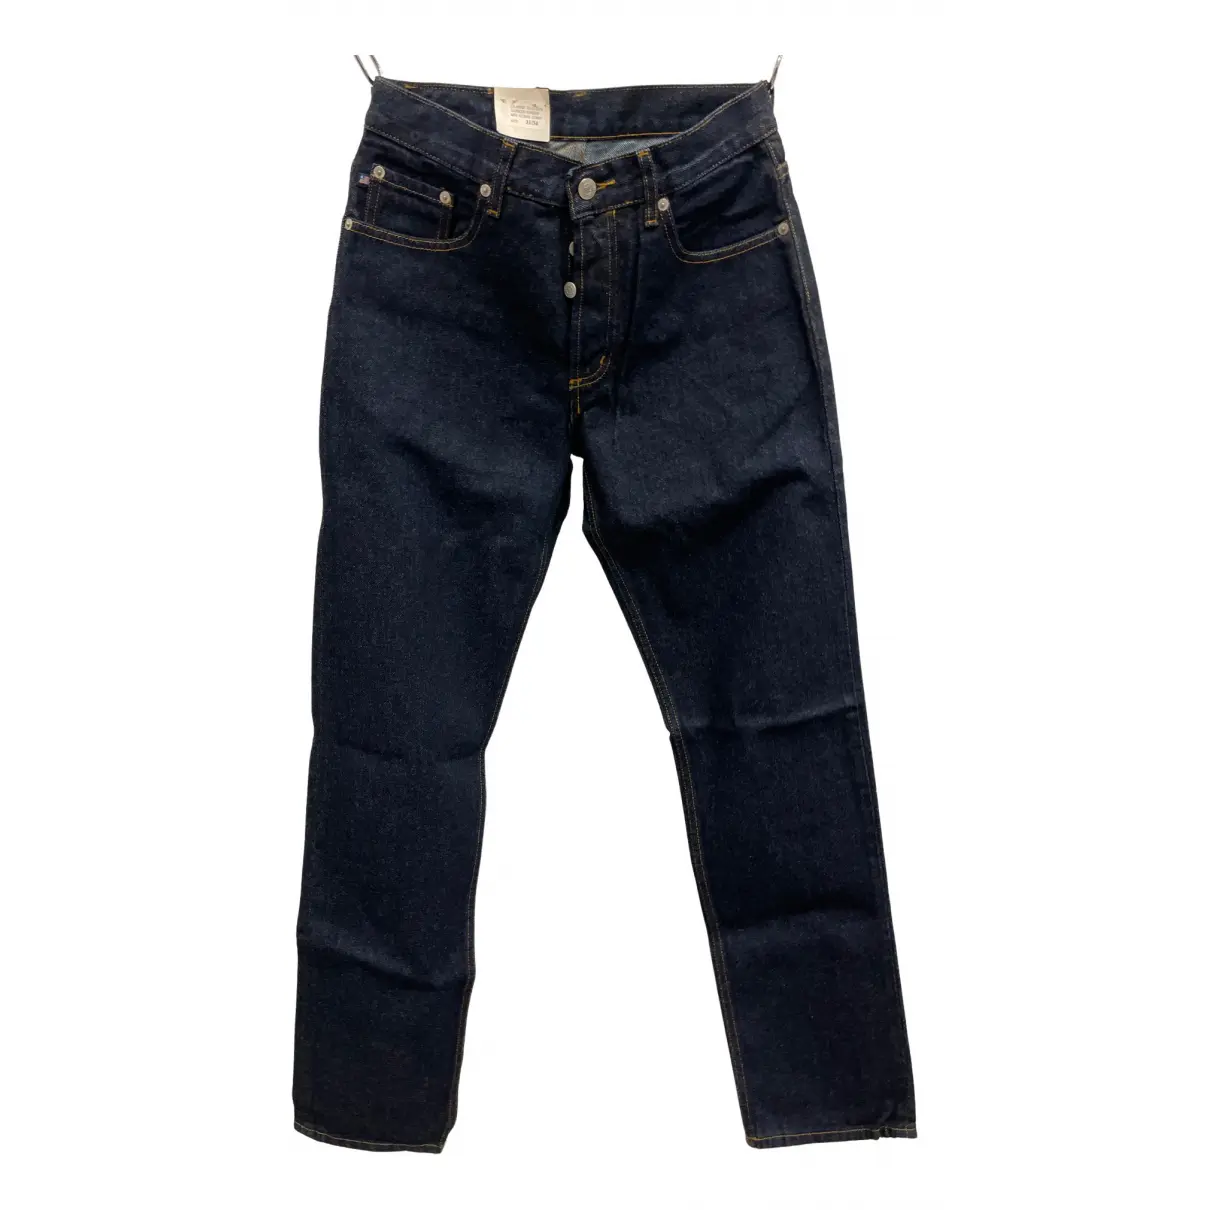 Straight jeans Polo Ralph Lauren